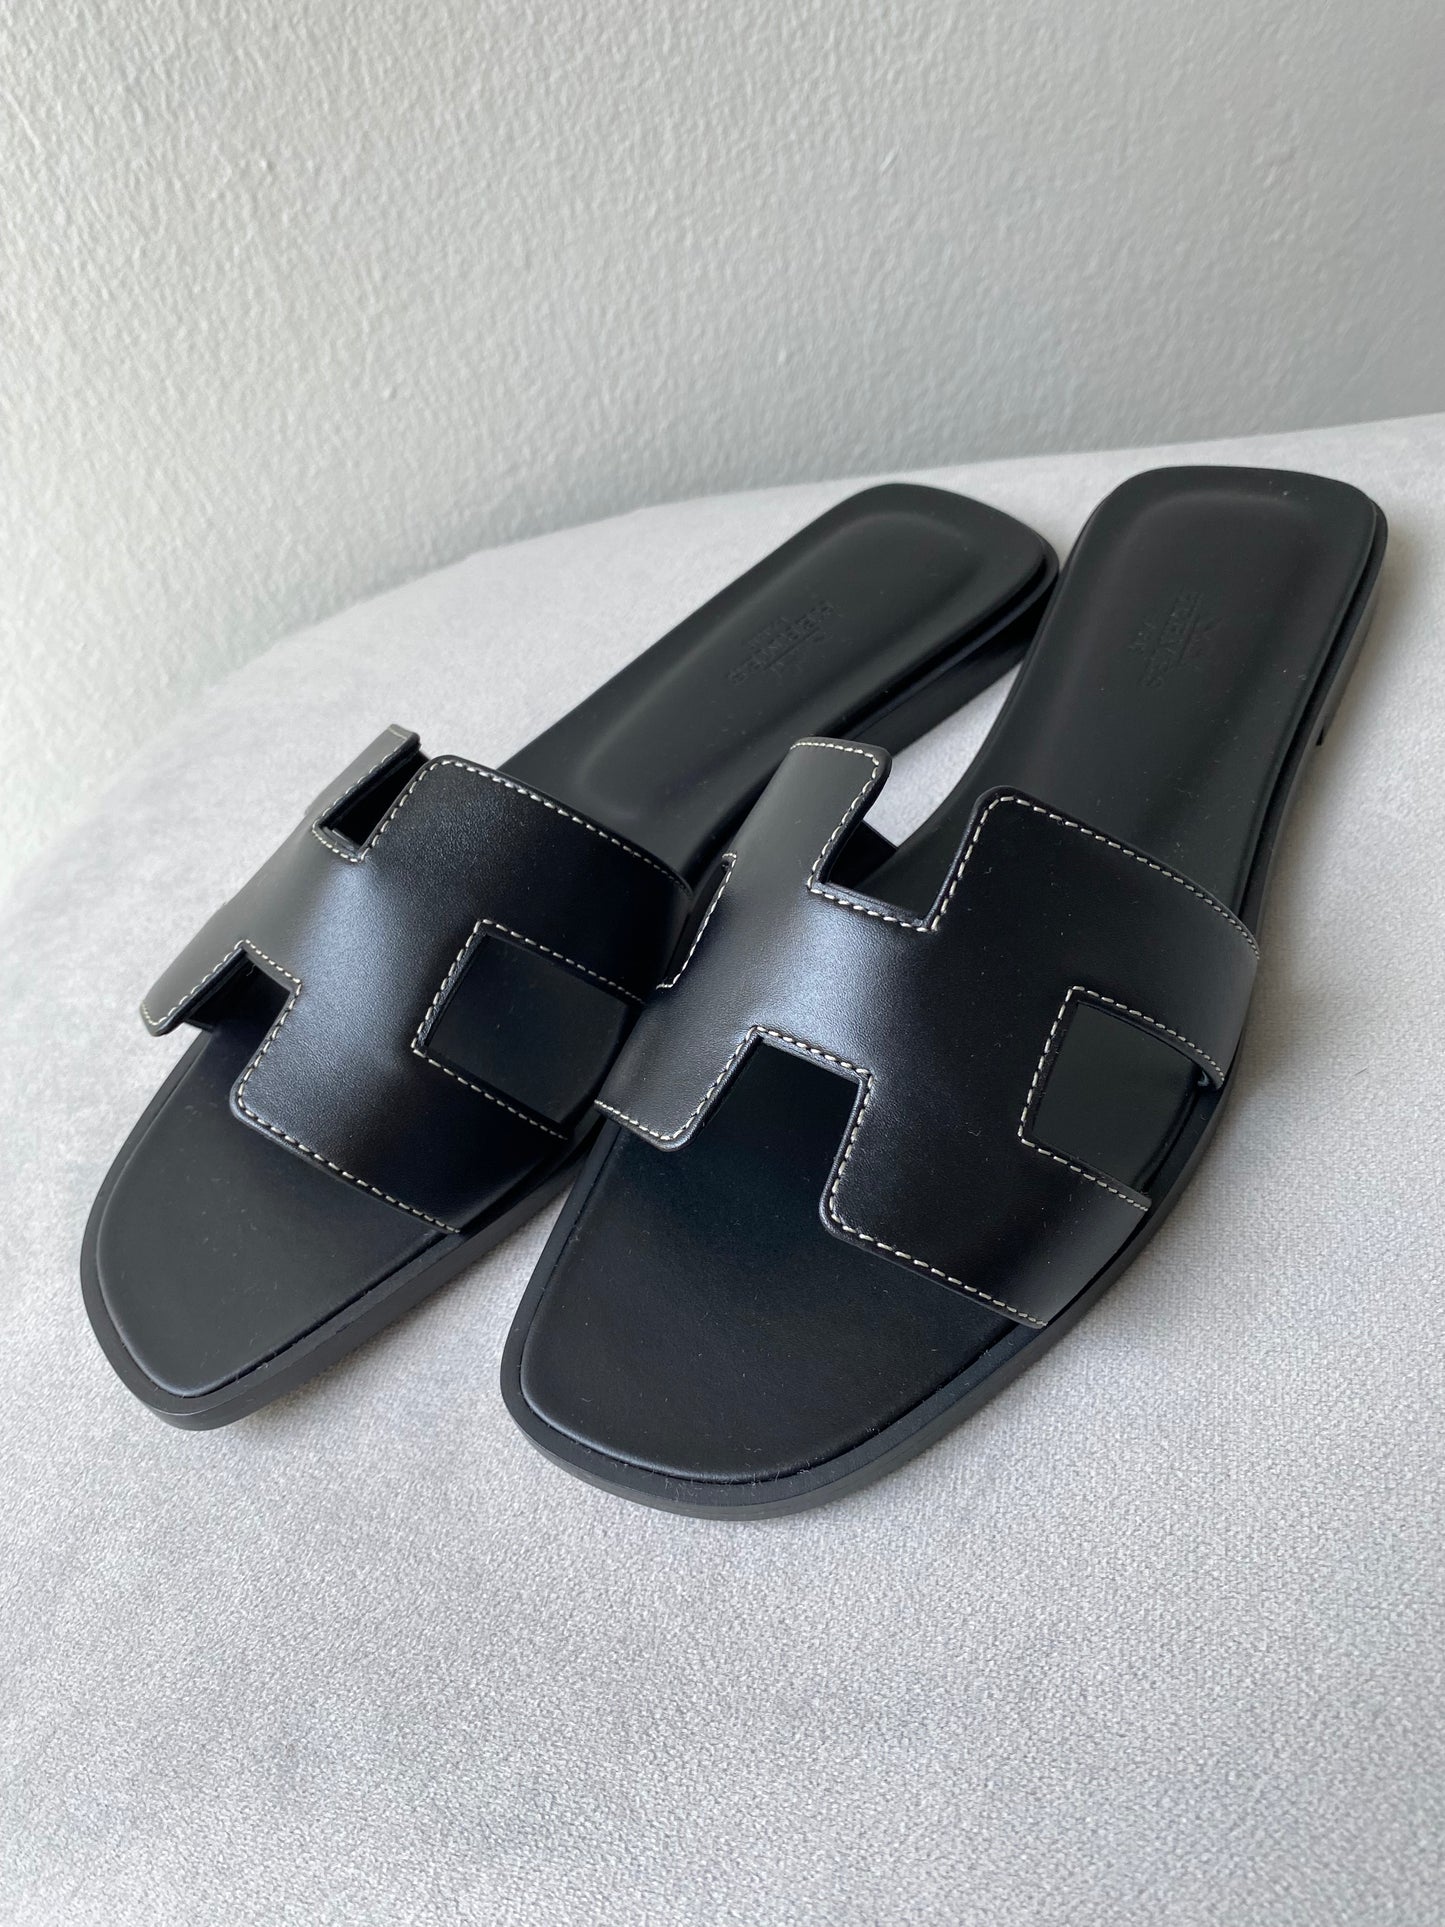 HERMÈS Oran Sandals in Black